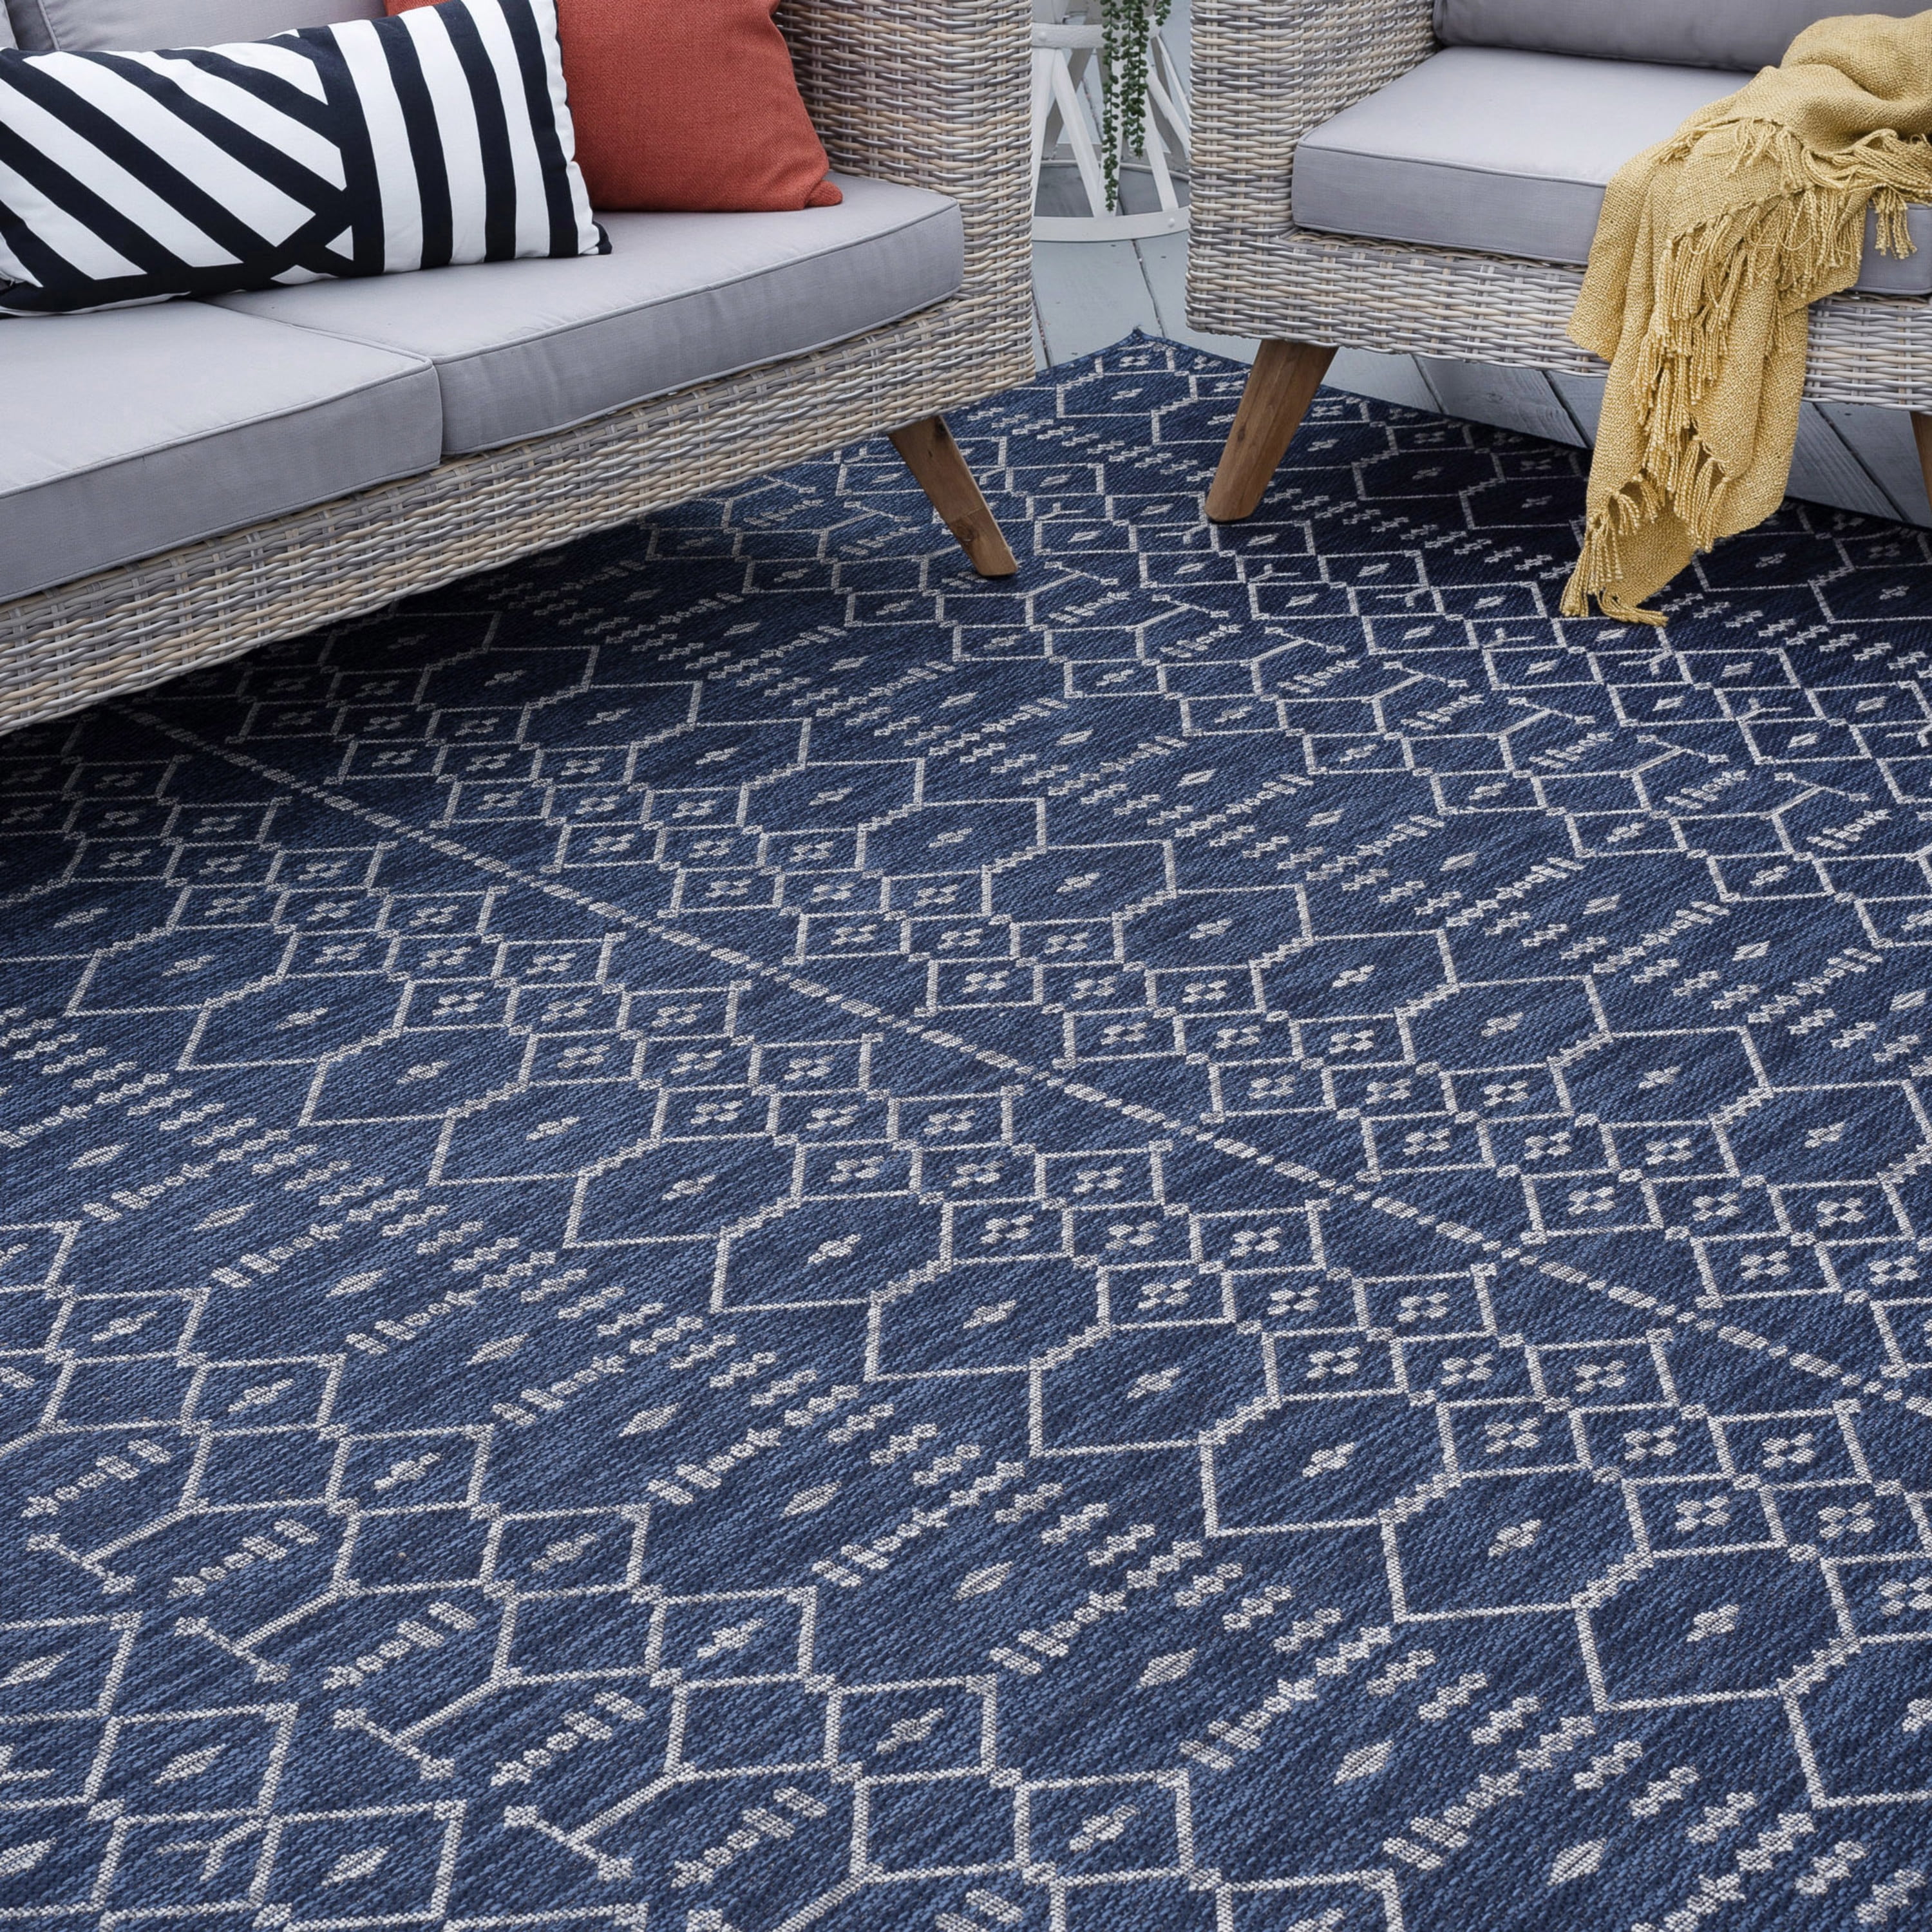 Area Rug Rectangular Geometric Floral Transitional Carpet Indoor Home Decor 5x8 